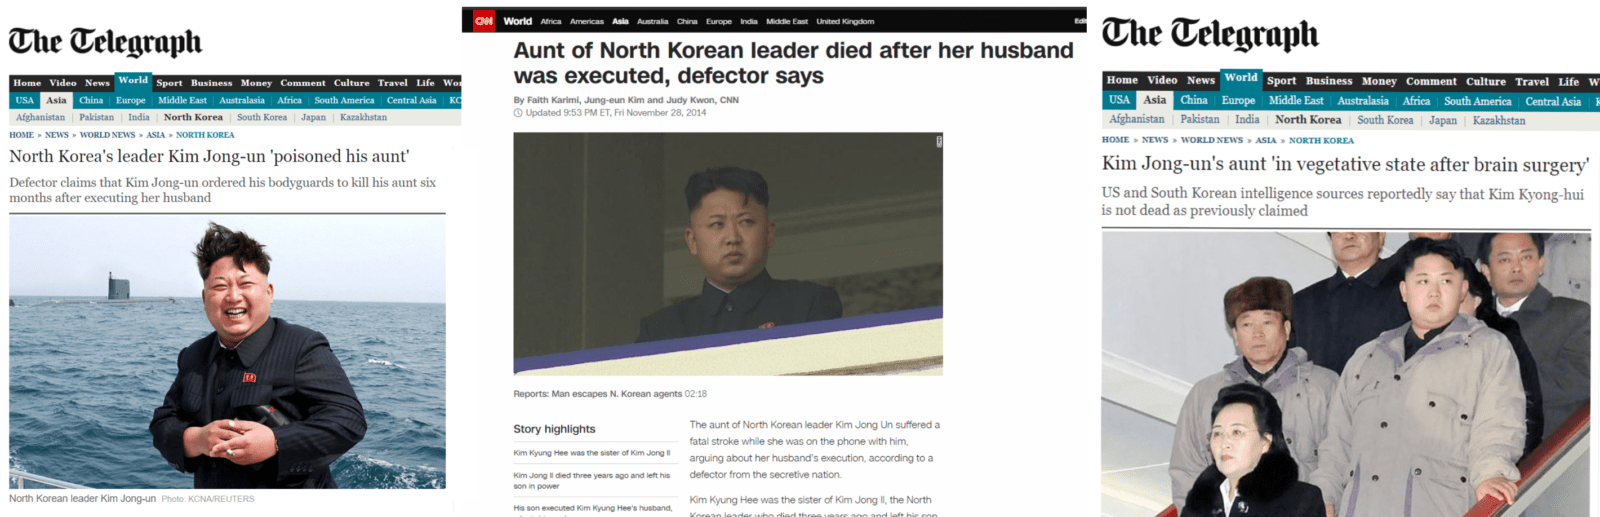 FireShot-Capture-088-North-Koreas-leader-Kim-Jong-un-poisoned-his-aunt-Telegraph_-www.telegraph.co_.uk_